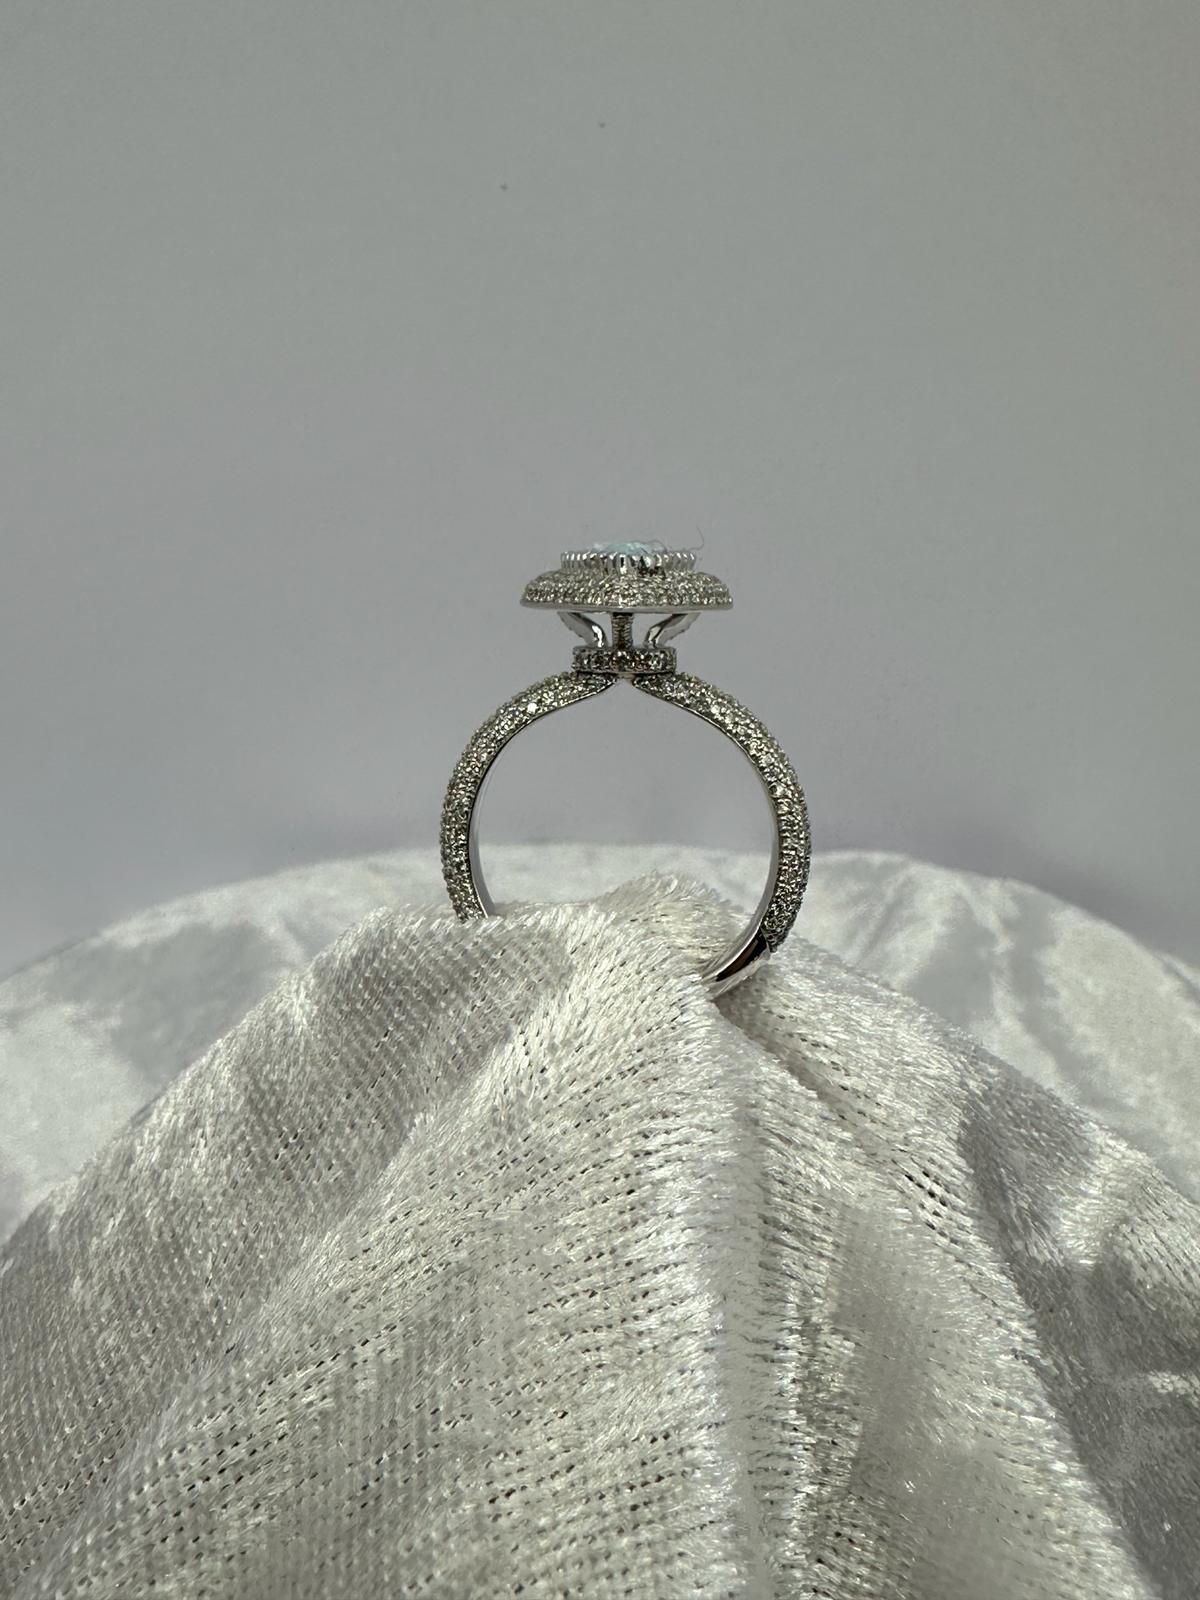 Stunning Aquamarine and diamond ring. 4.6+ total carats